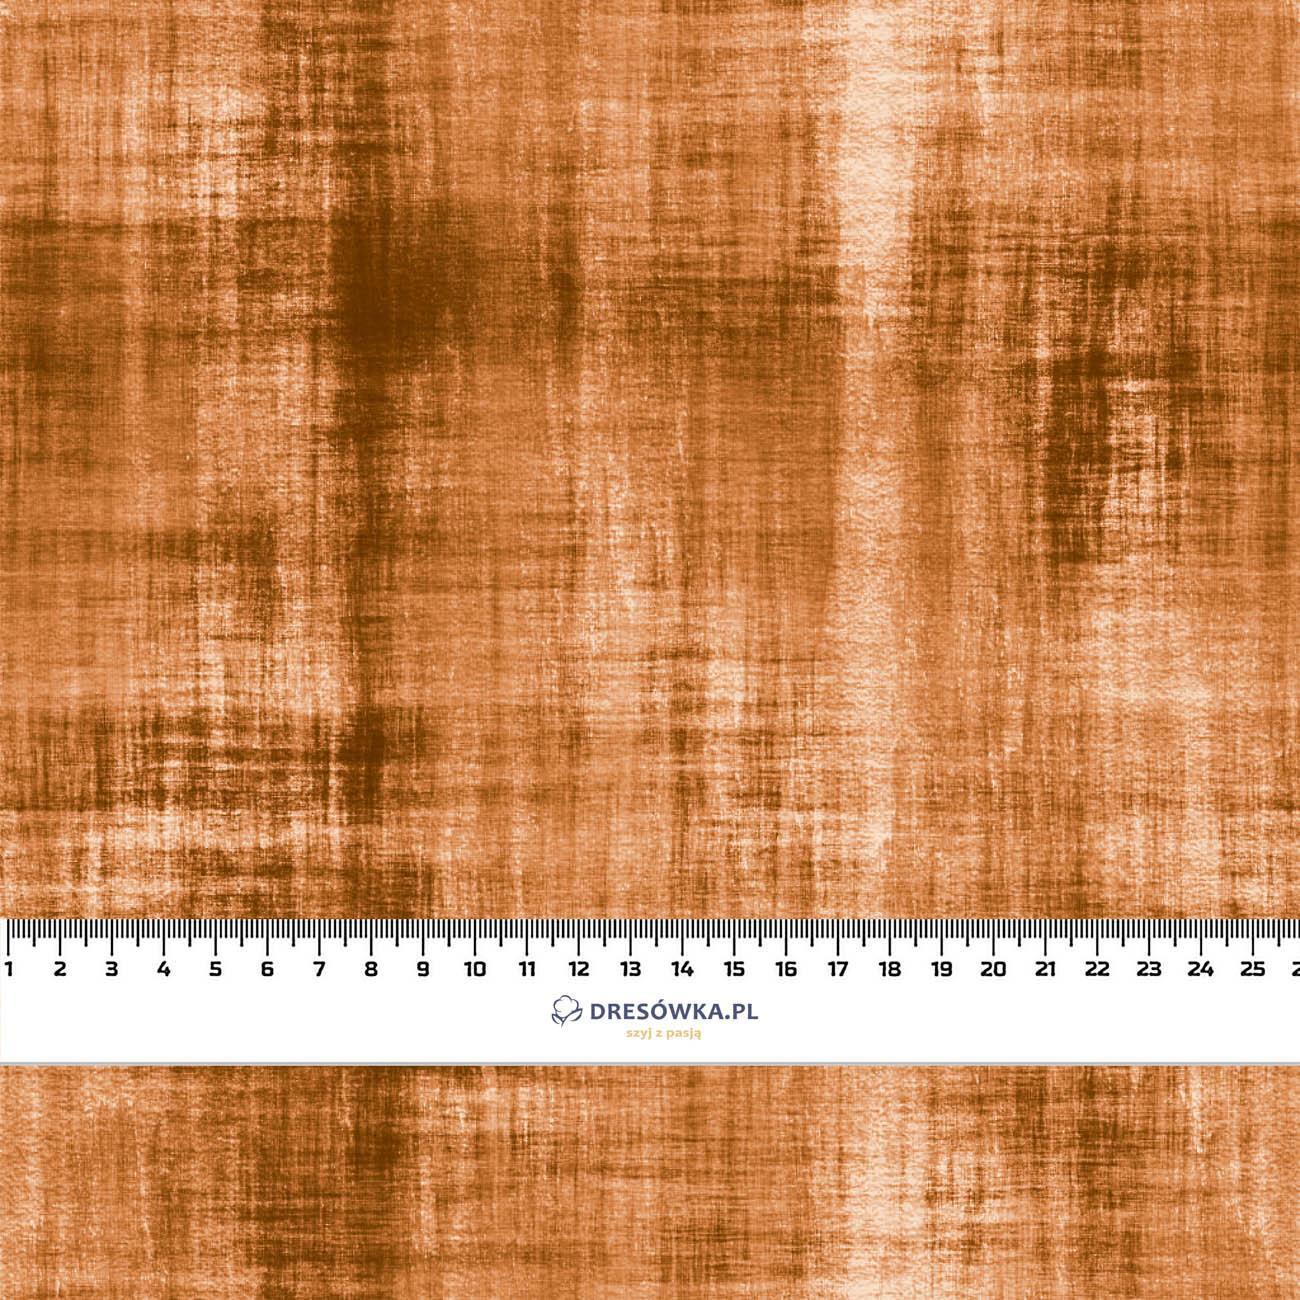 ACID WASH PAT. 2 (caramel) - Cotton woven fabric